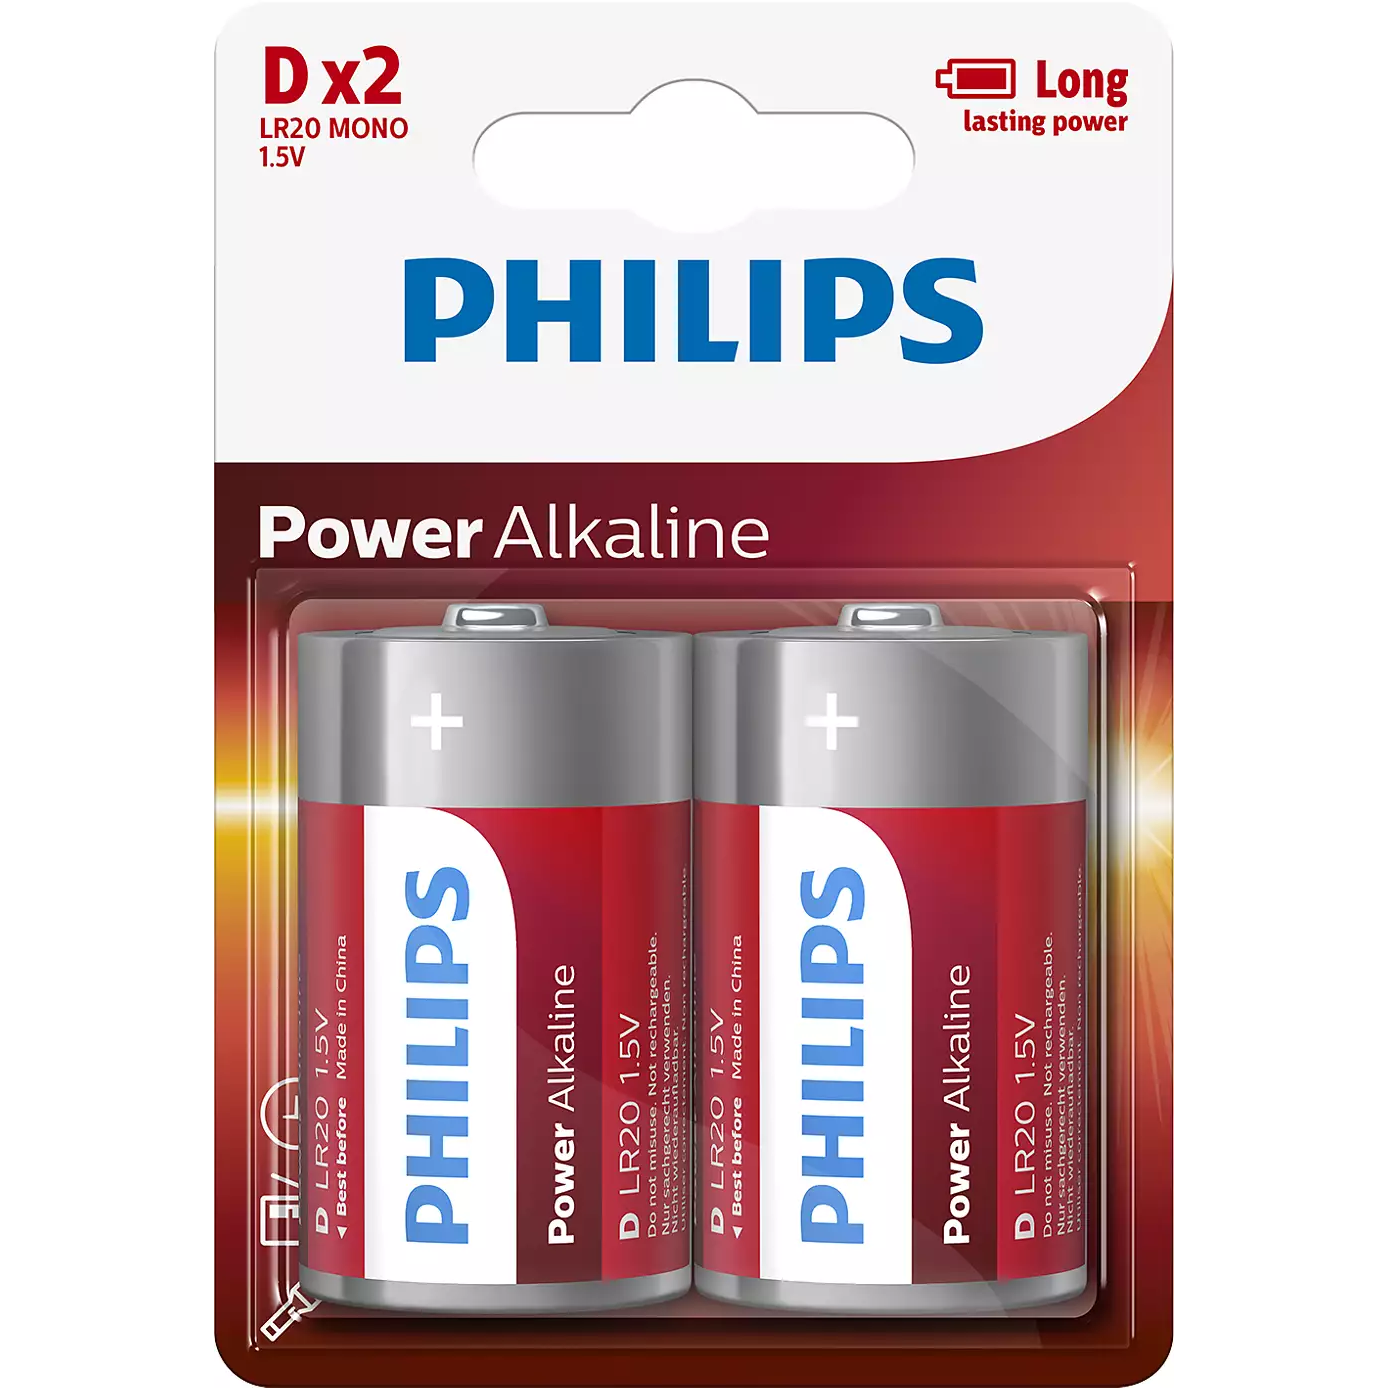 Philips D Power Alkaline Battery / Pack of 2